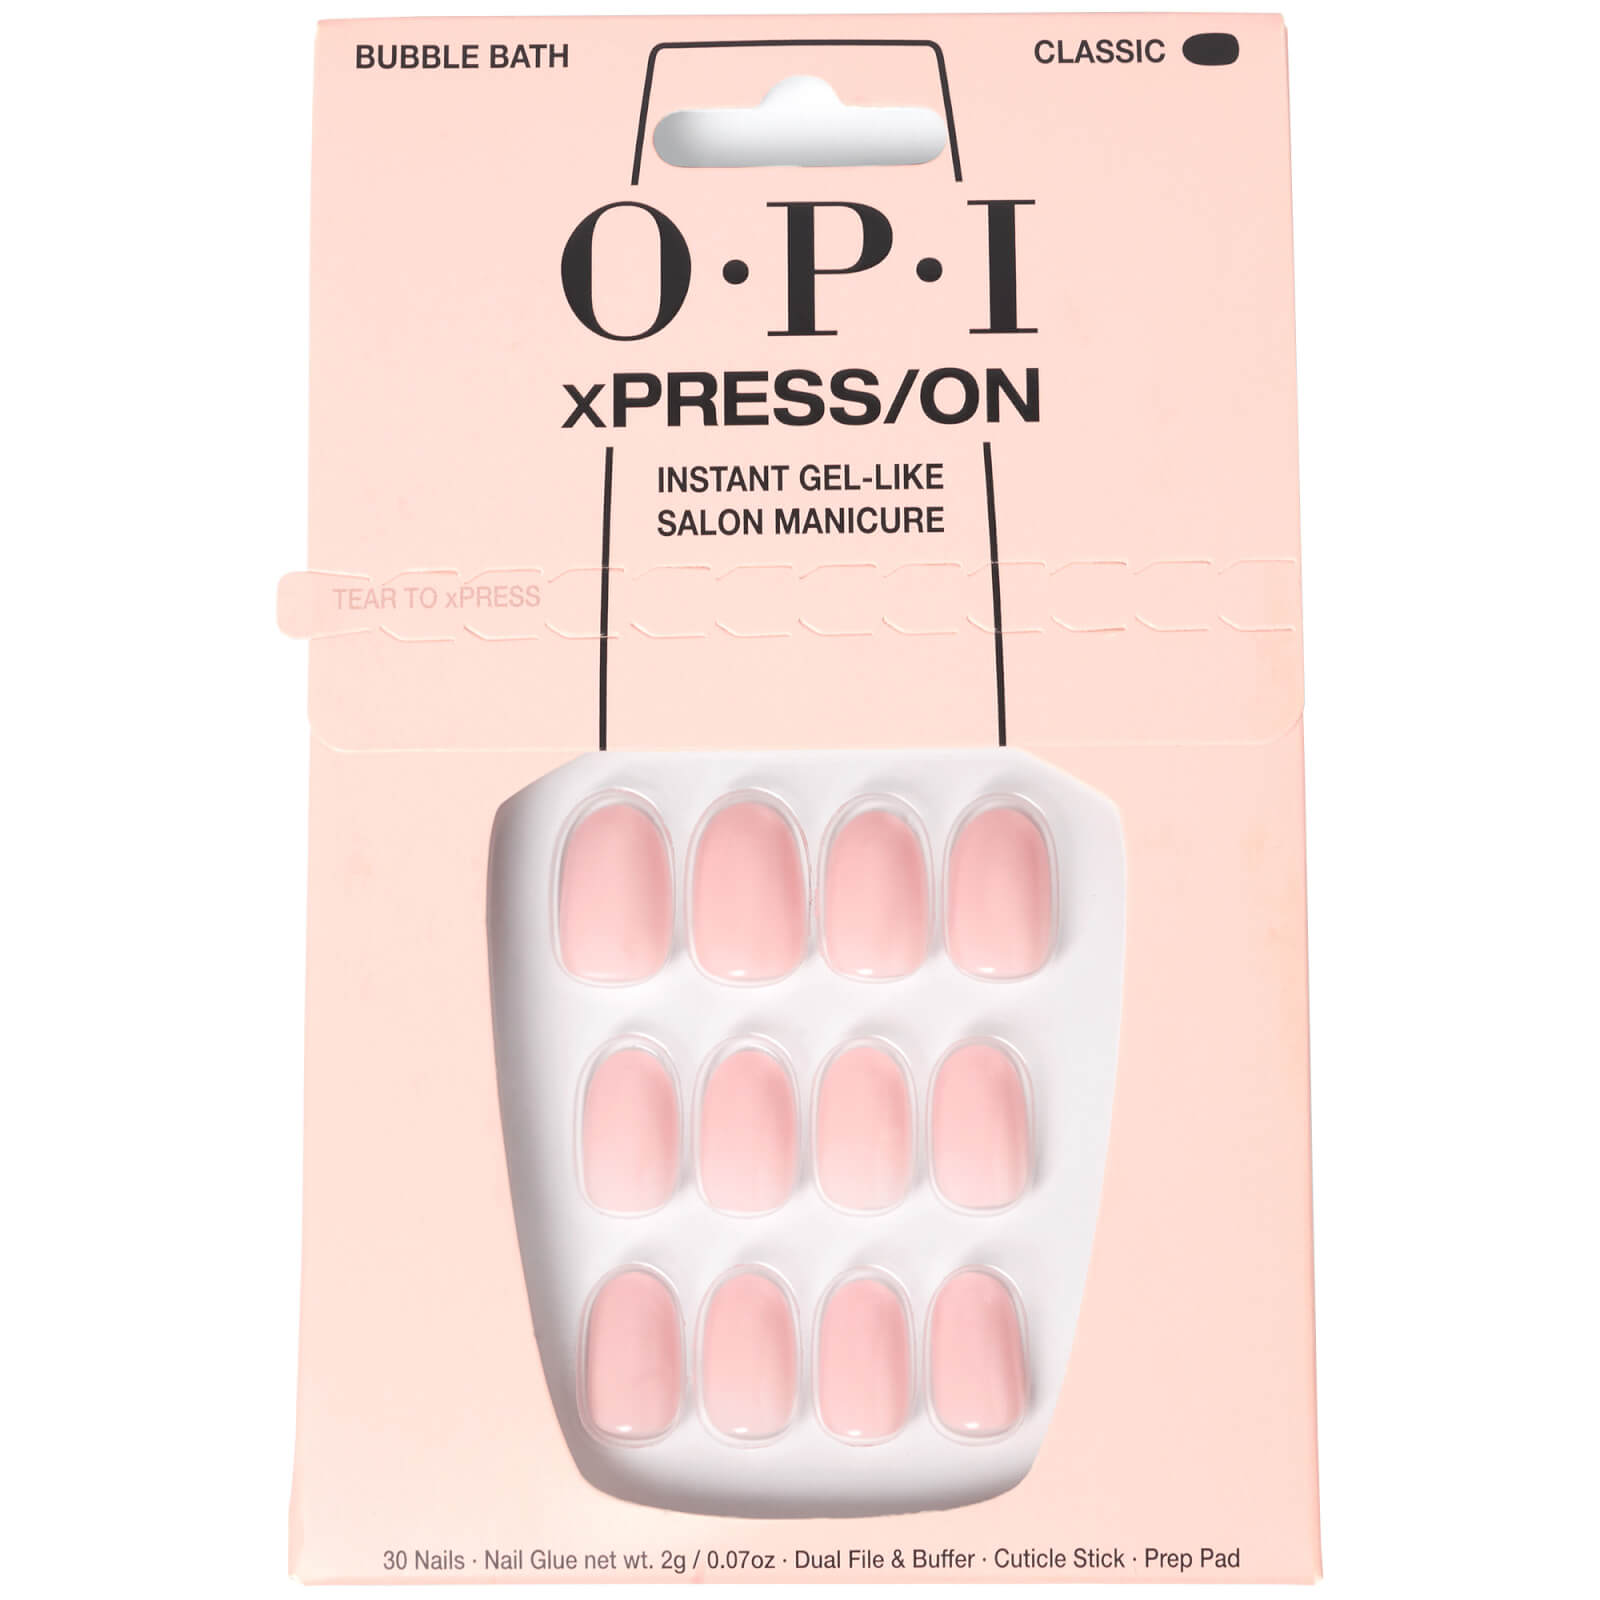 Opi Xpress/on - Bubble Bath Press On Nails Gel-like Salon Manicure In Pink